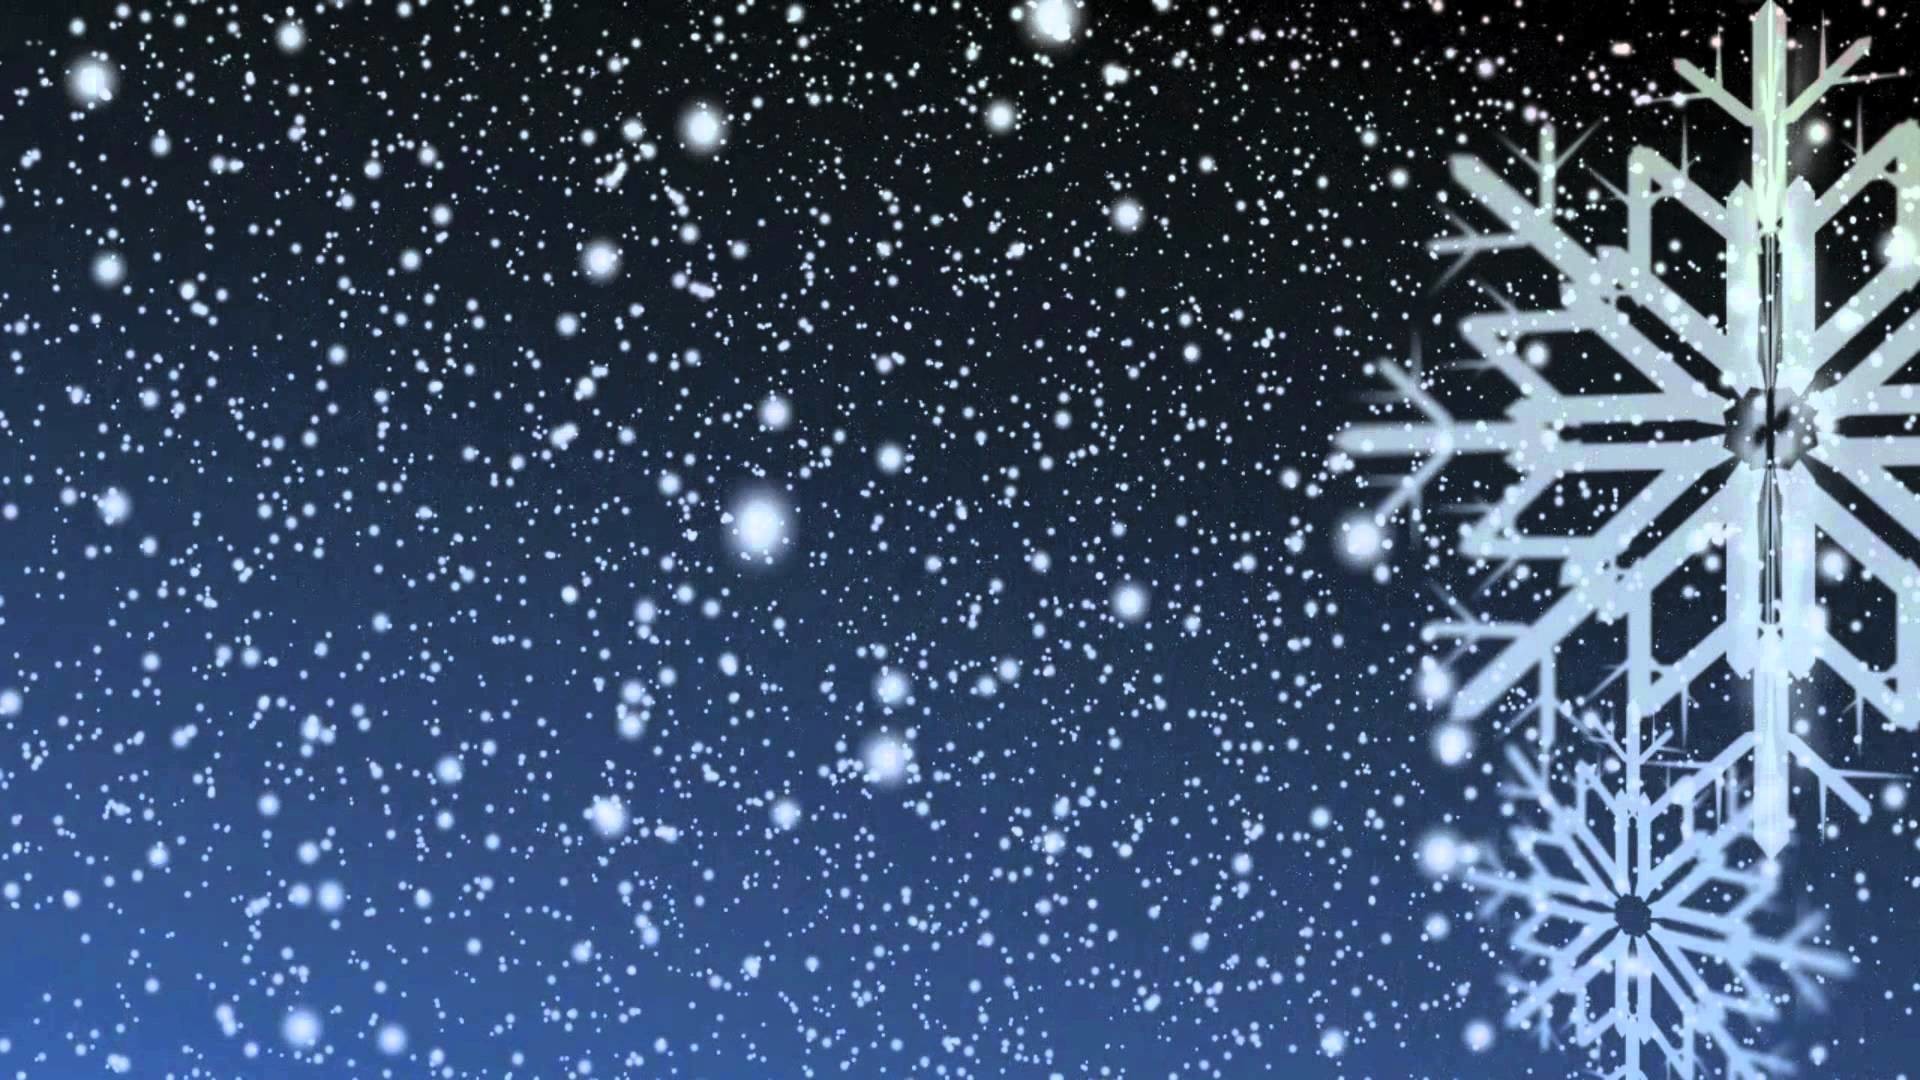 1920x1080 ... Falling Snow Wallpaper Animated ...